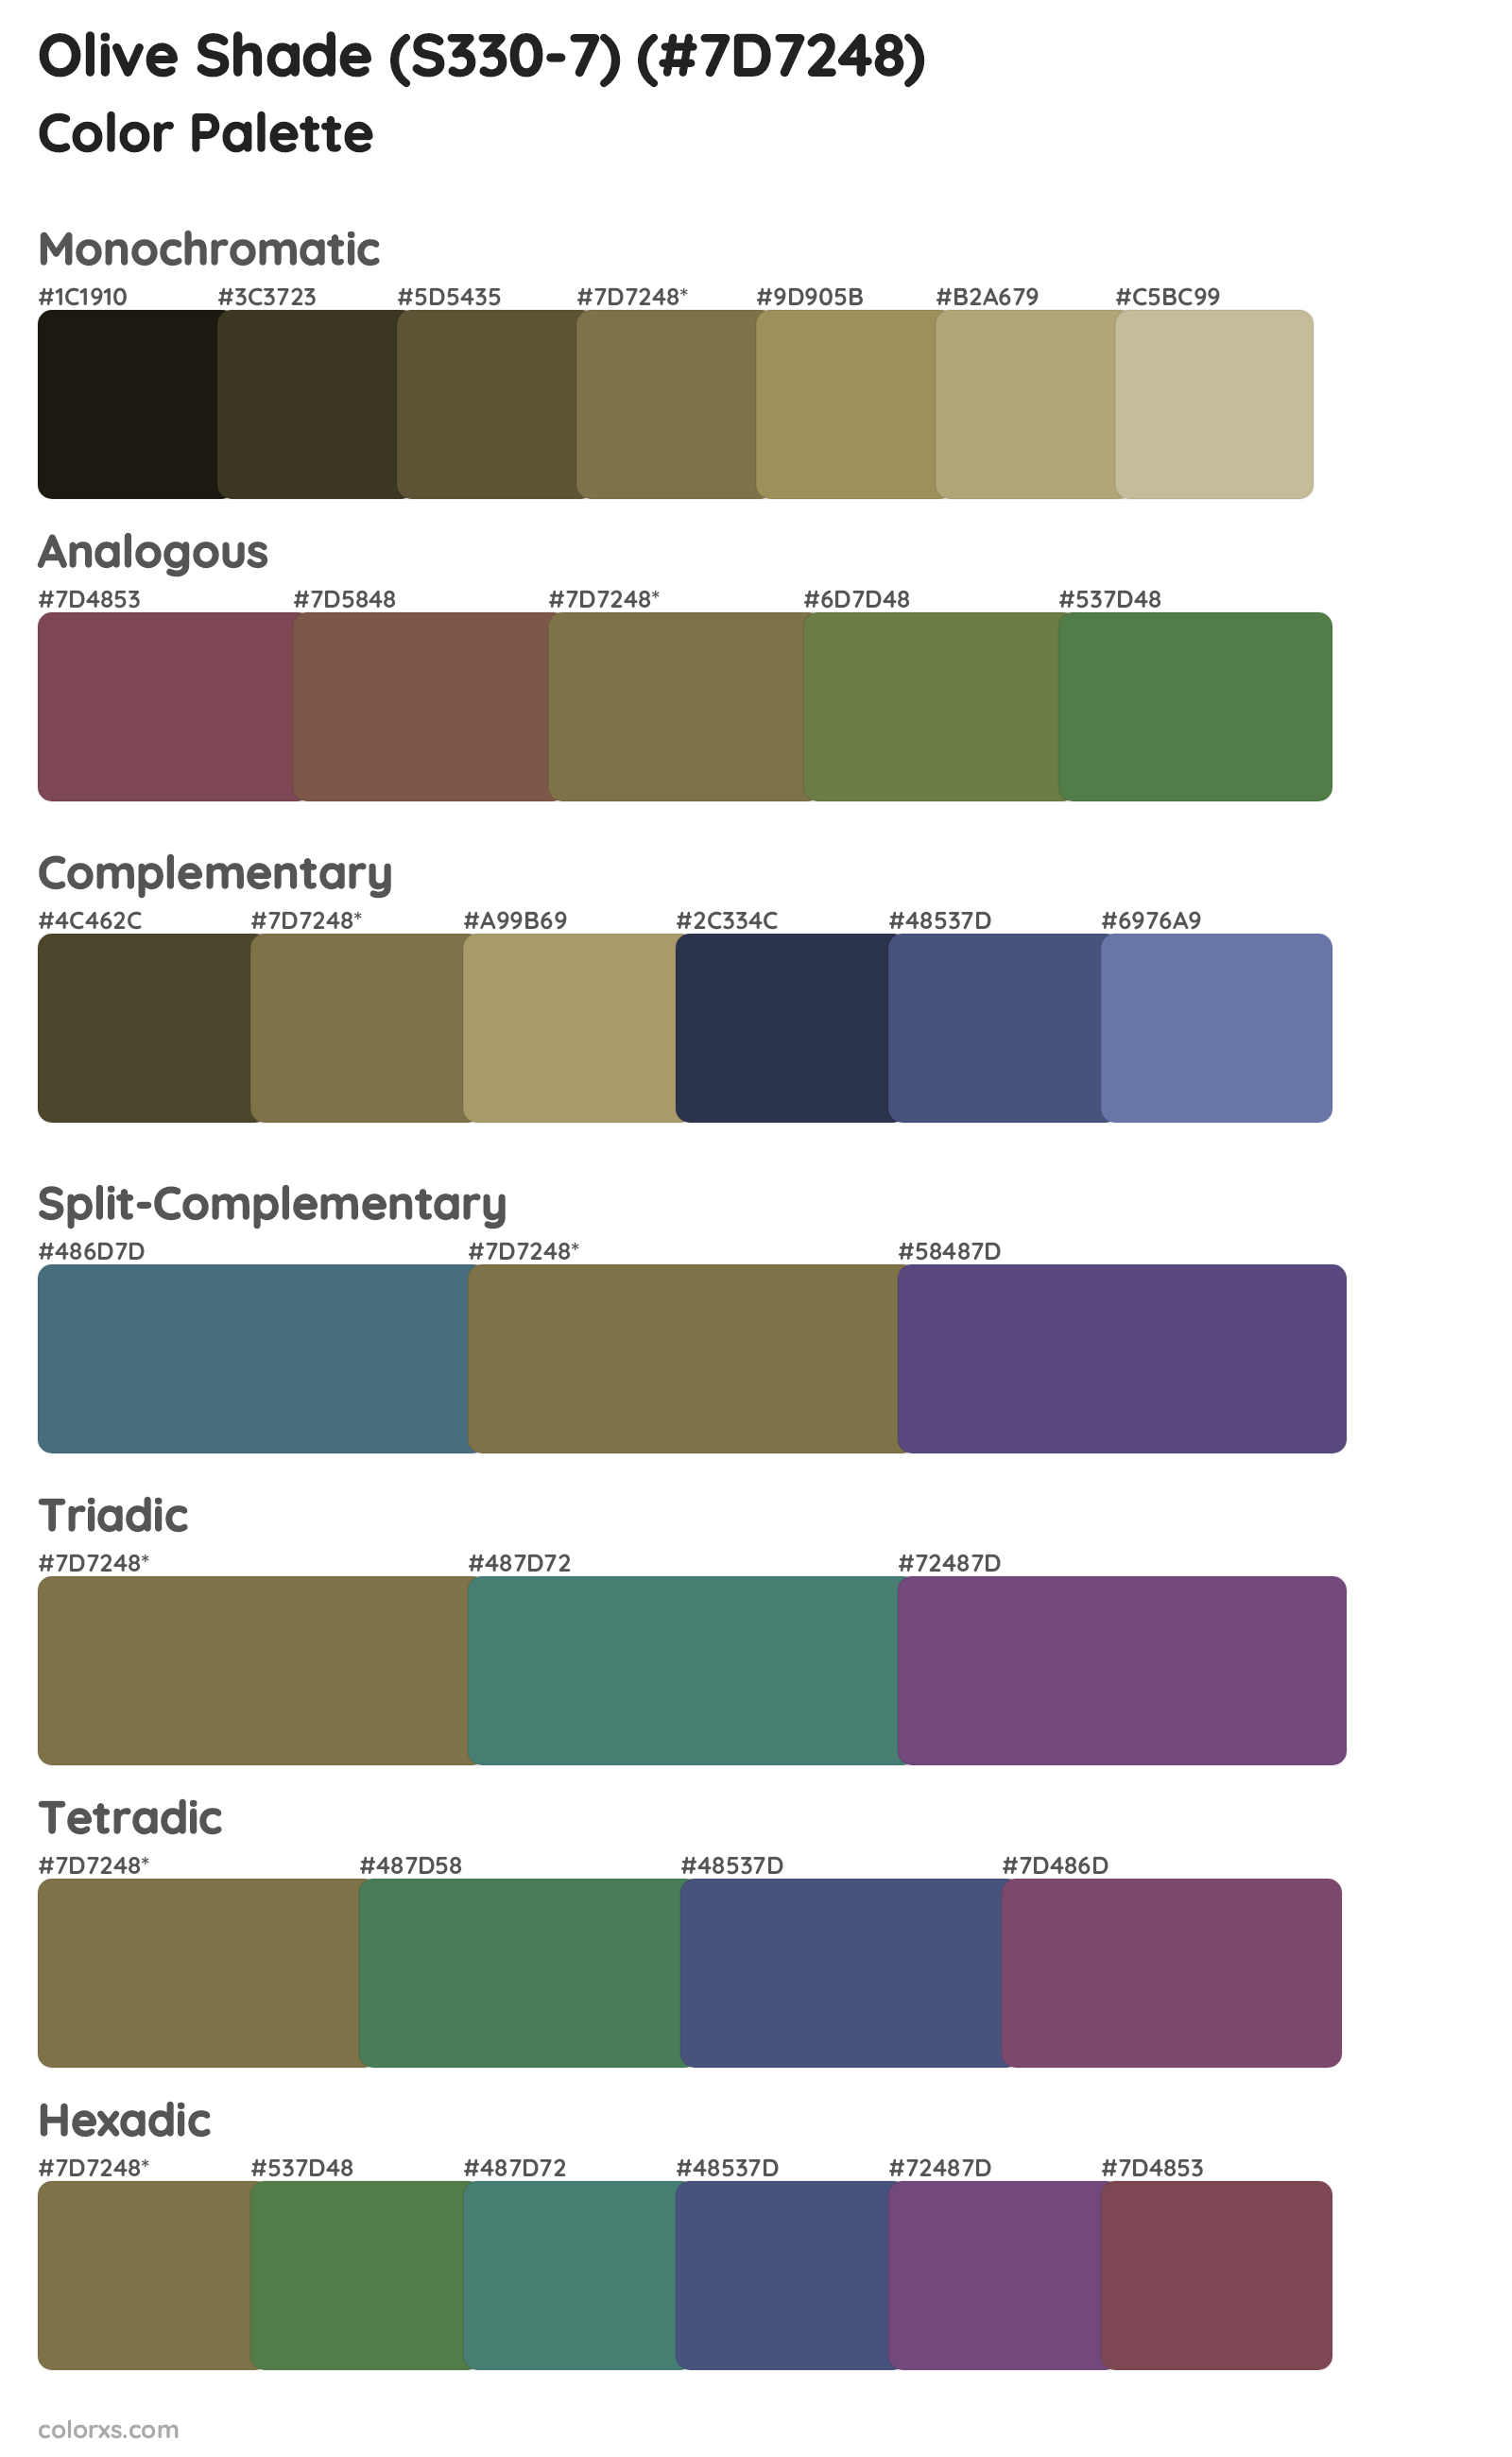 Olive Shade (S330-7) Color Scheme Palettes